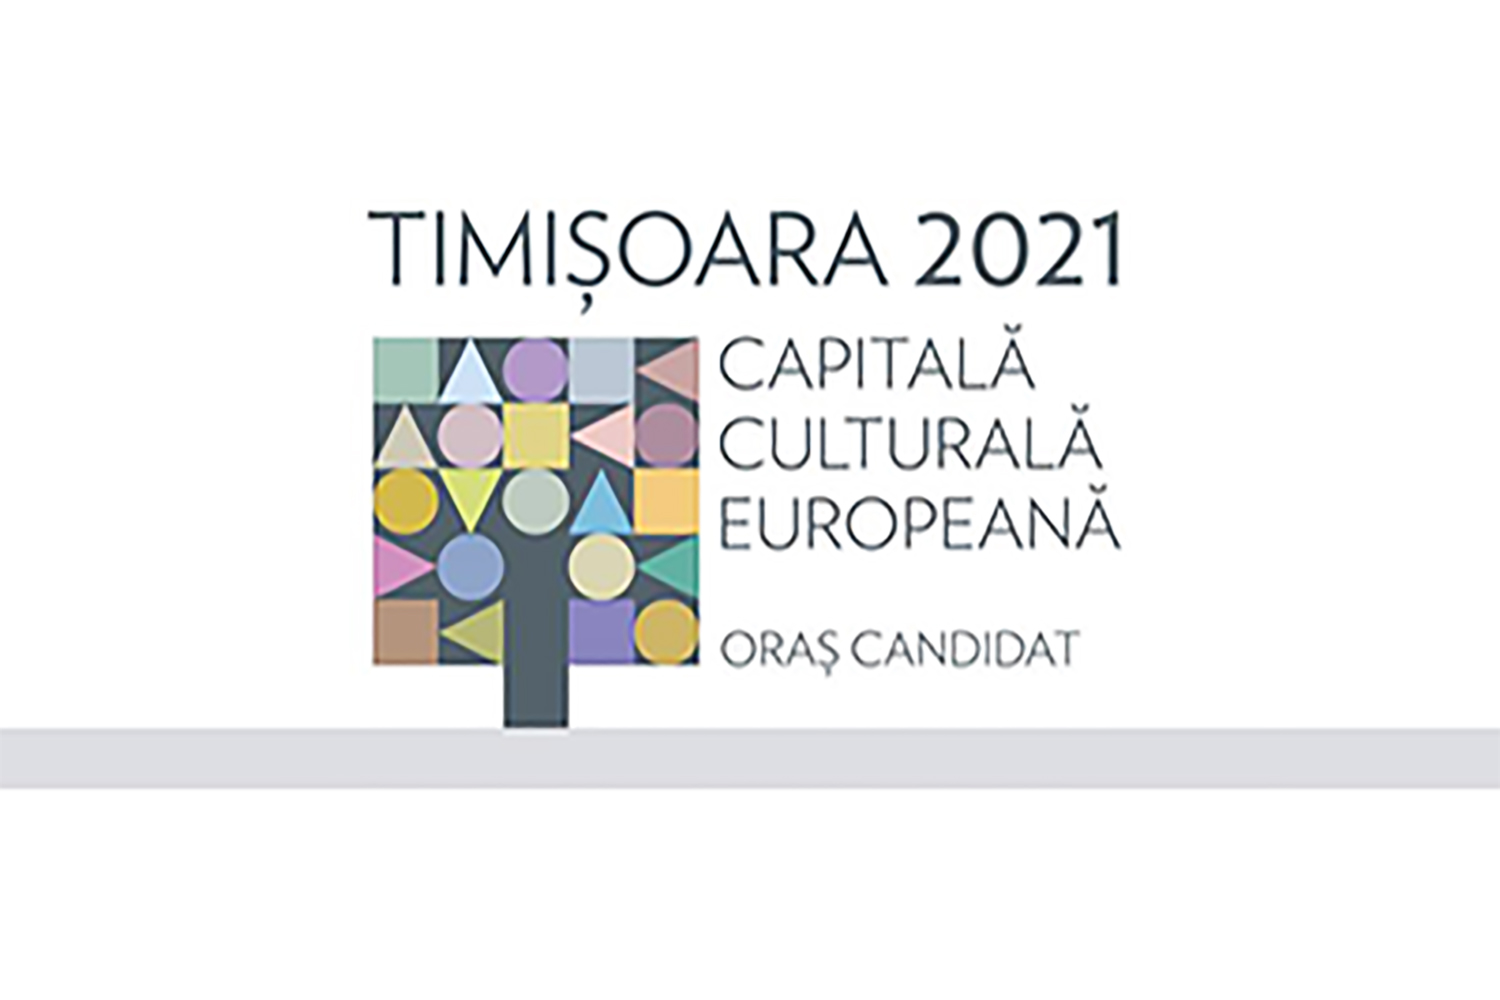 Comme Istanbul en 2010, Timisoara sera capitale européenne de la culture en 2021